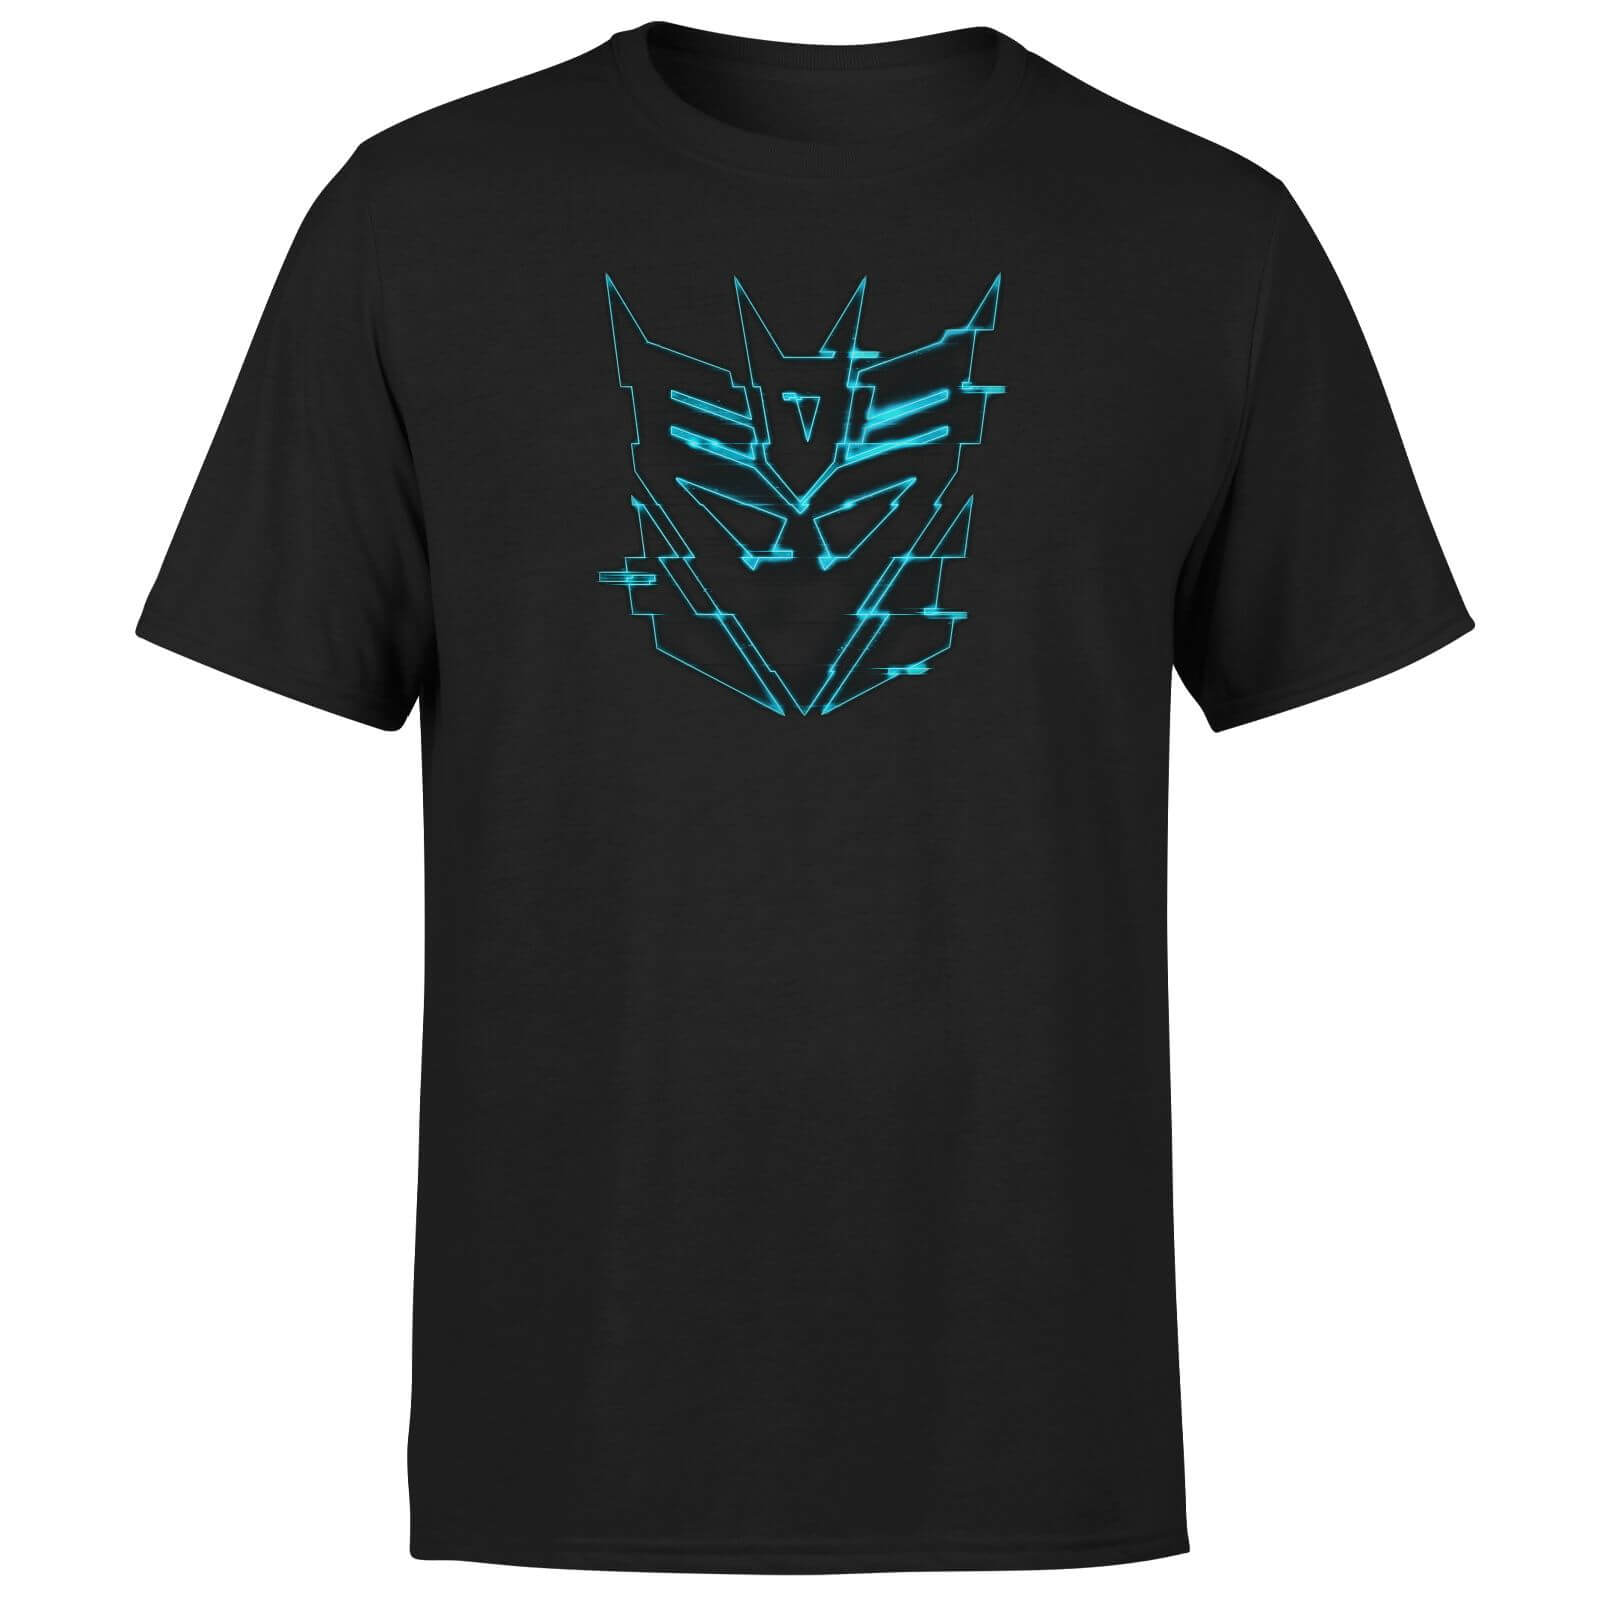 Transformers Decepticon Glitch Unisex T-Shirt - Black - S - Black